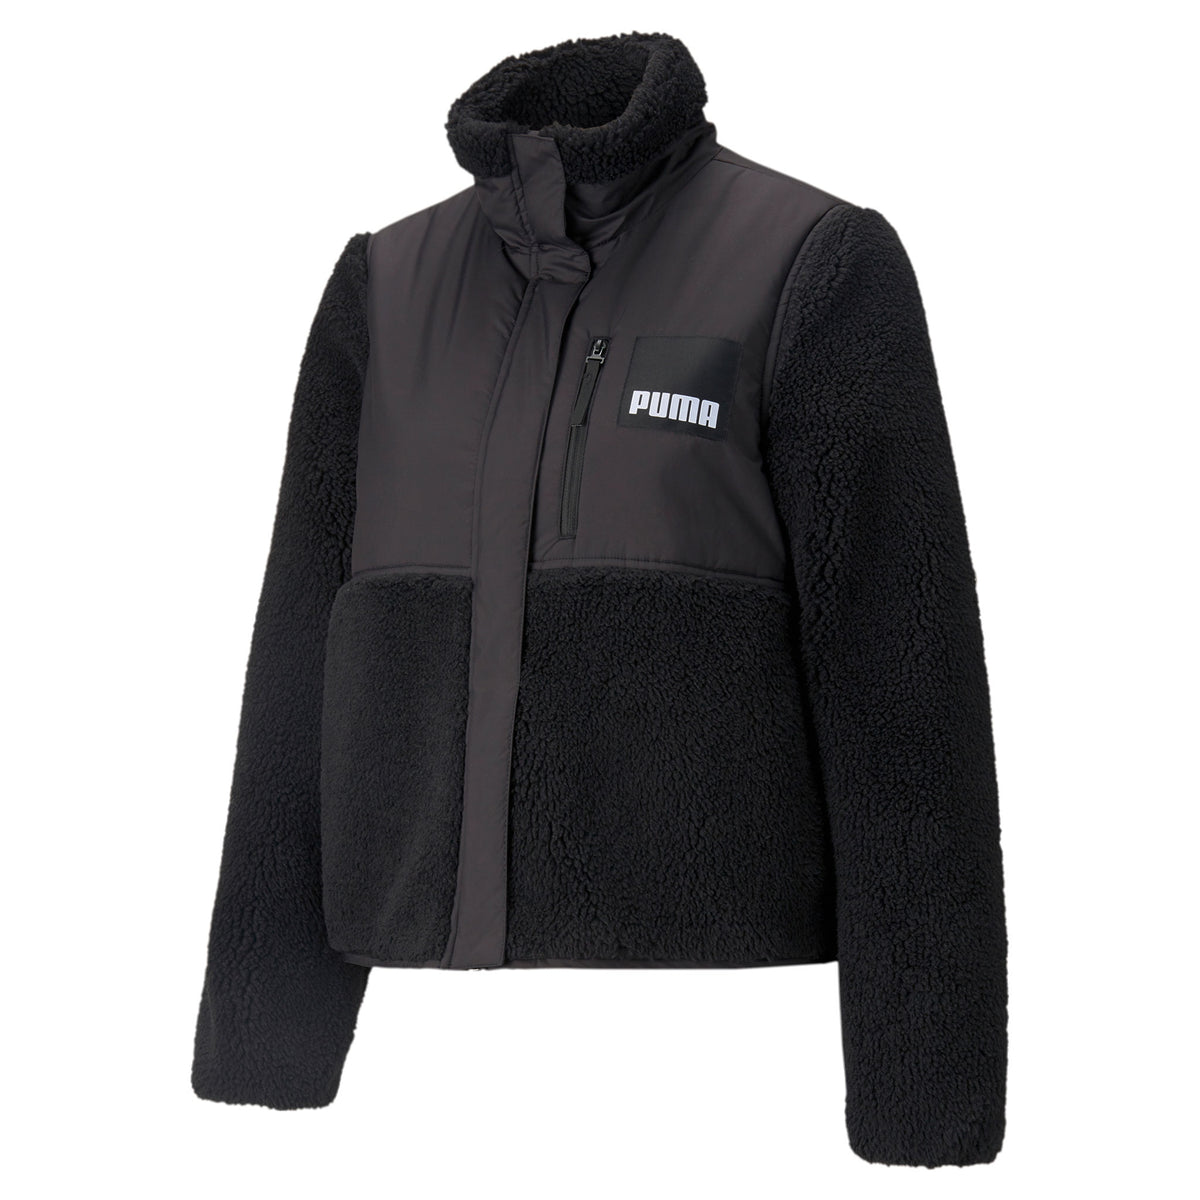 Puma Sherpa Hybrid manteau pour femme